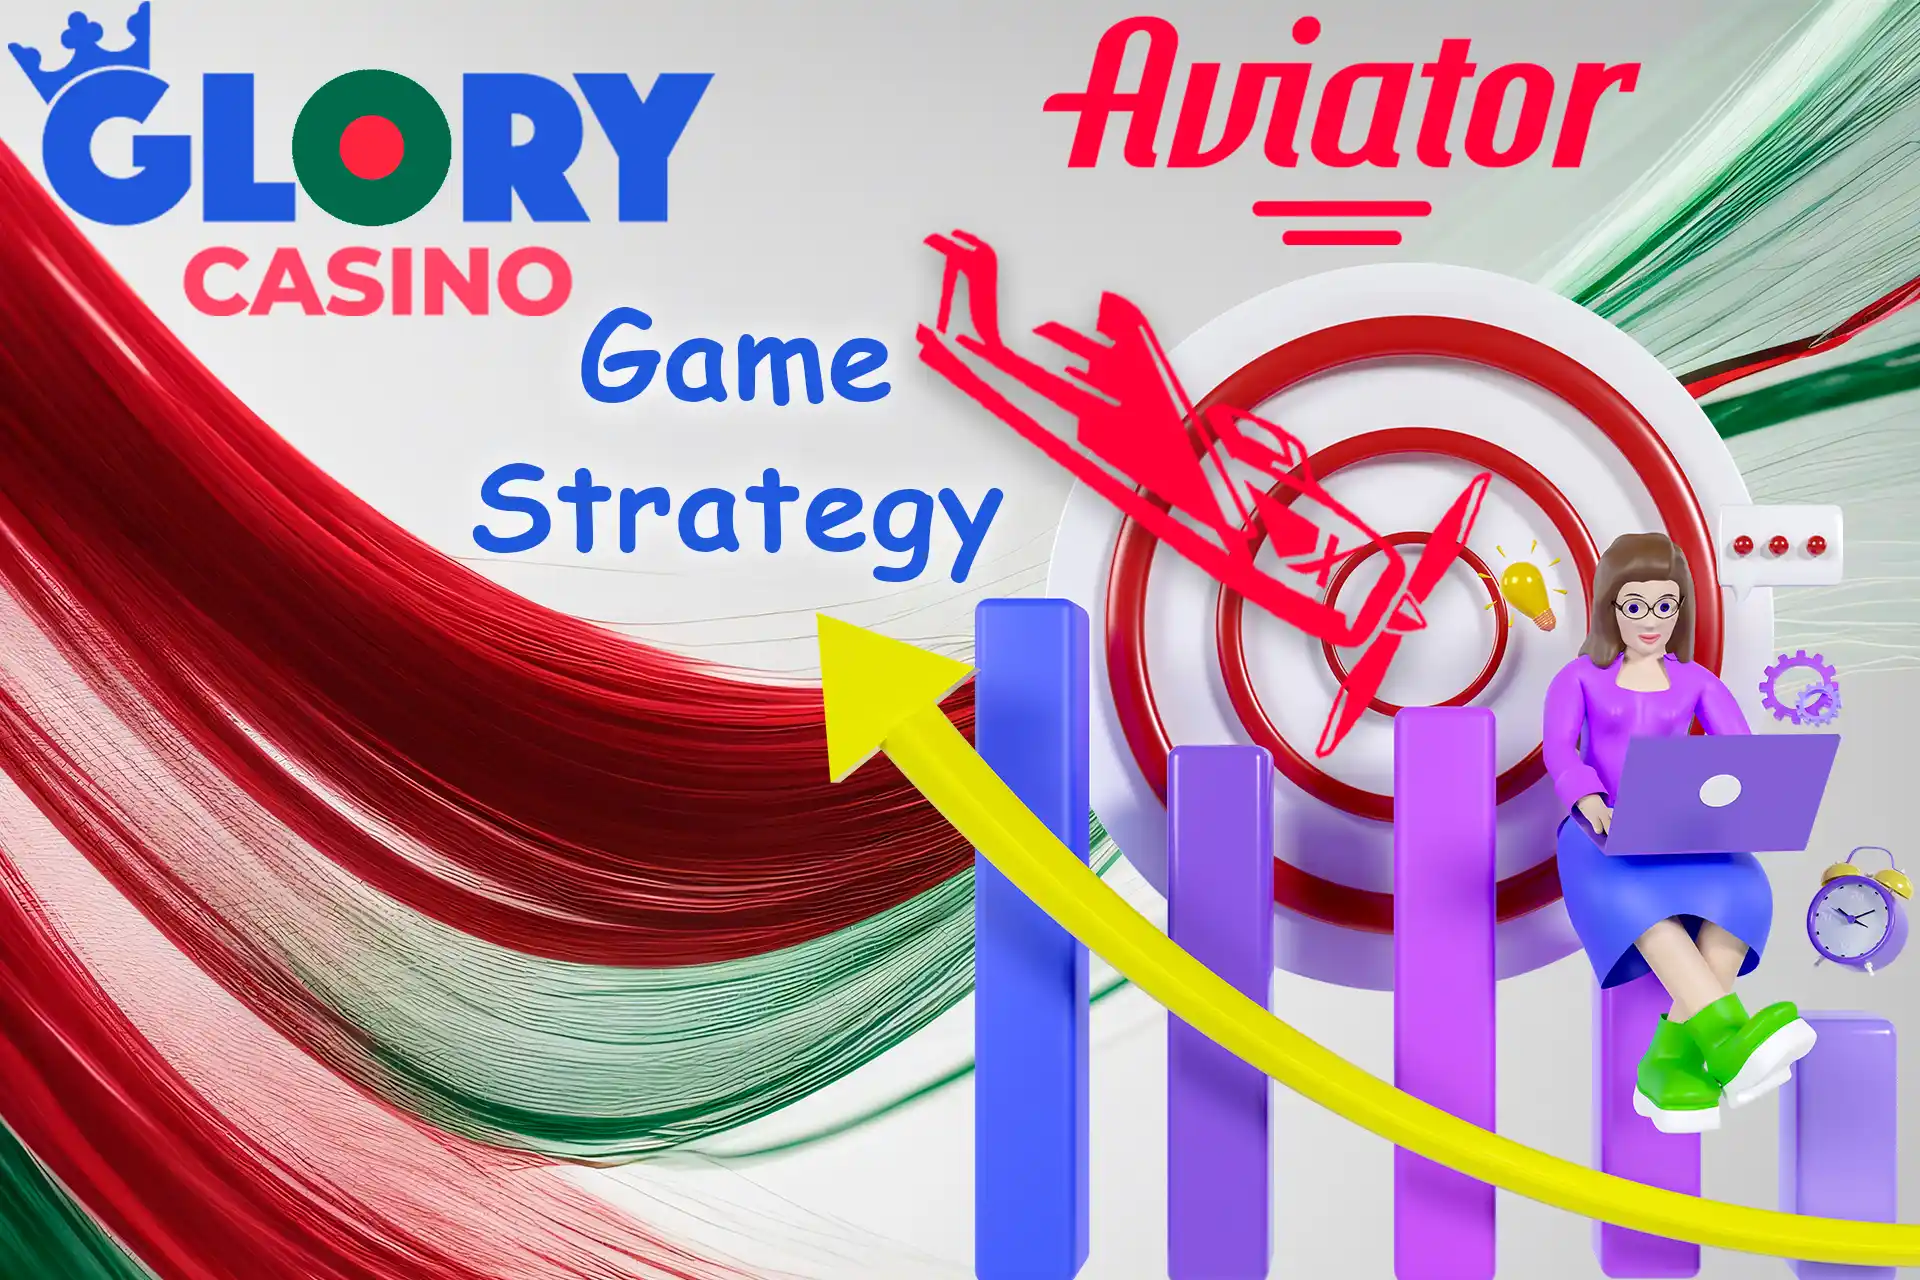 Aviator game strategy at Glory Casino Bangladesh